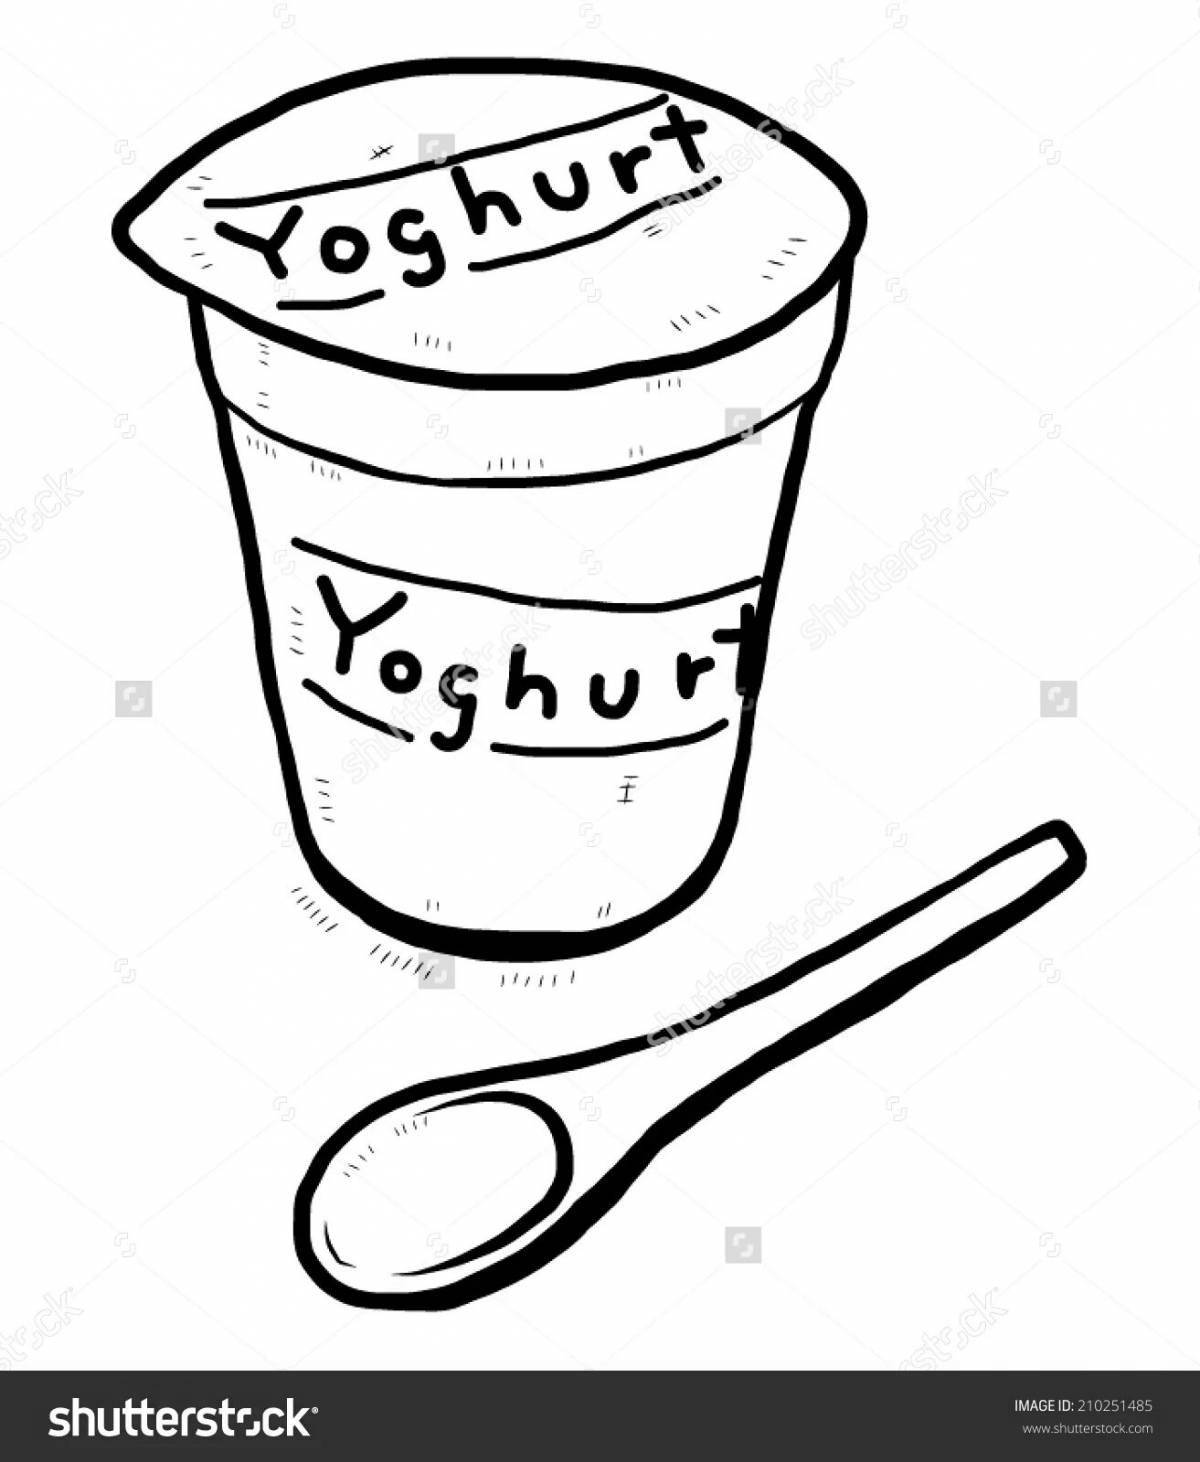 Color-frenzy yogurt coloring page для детей